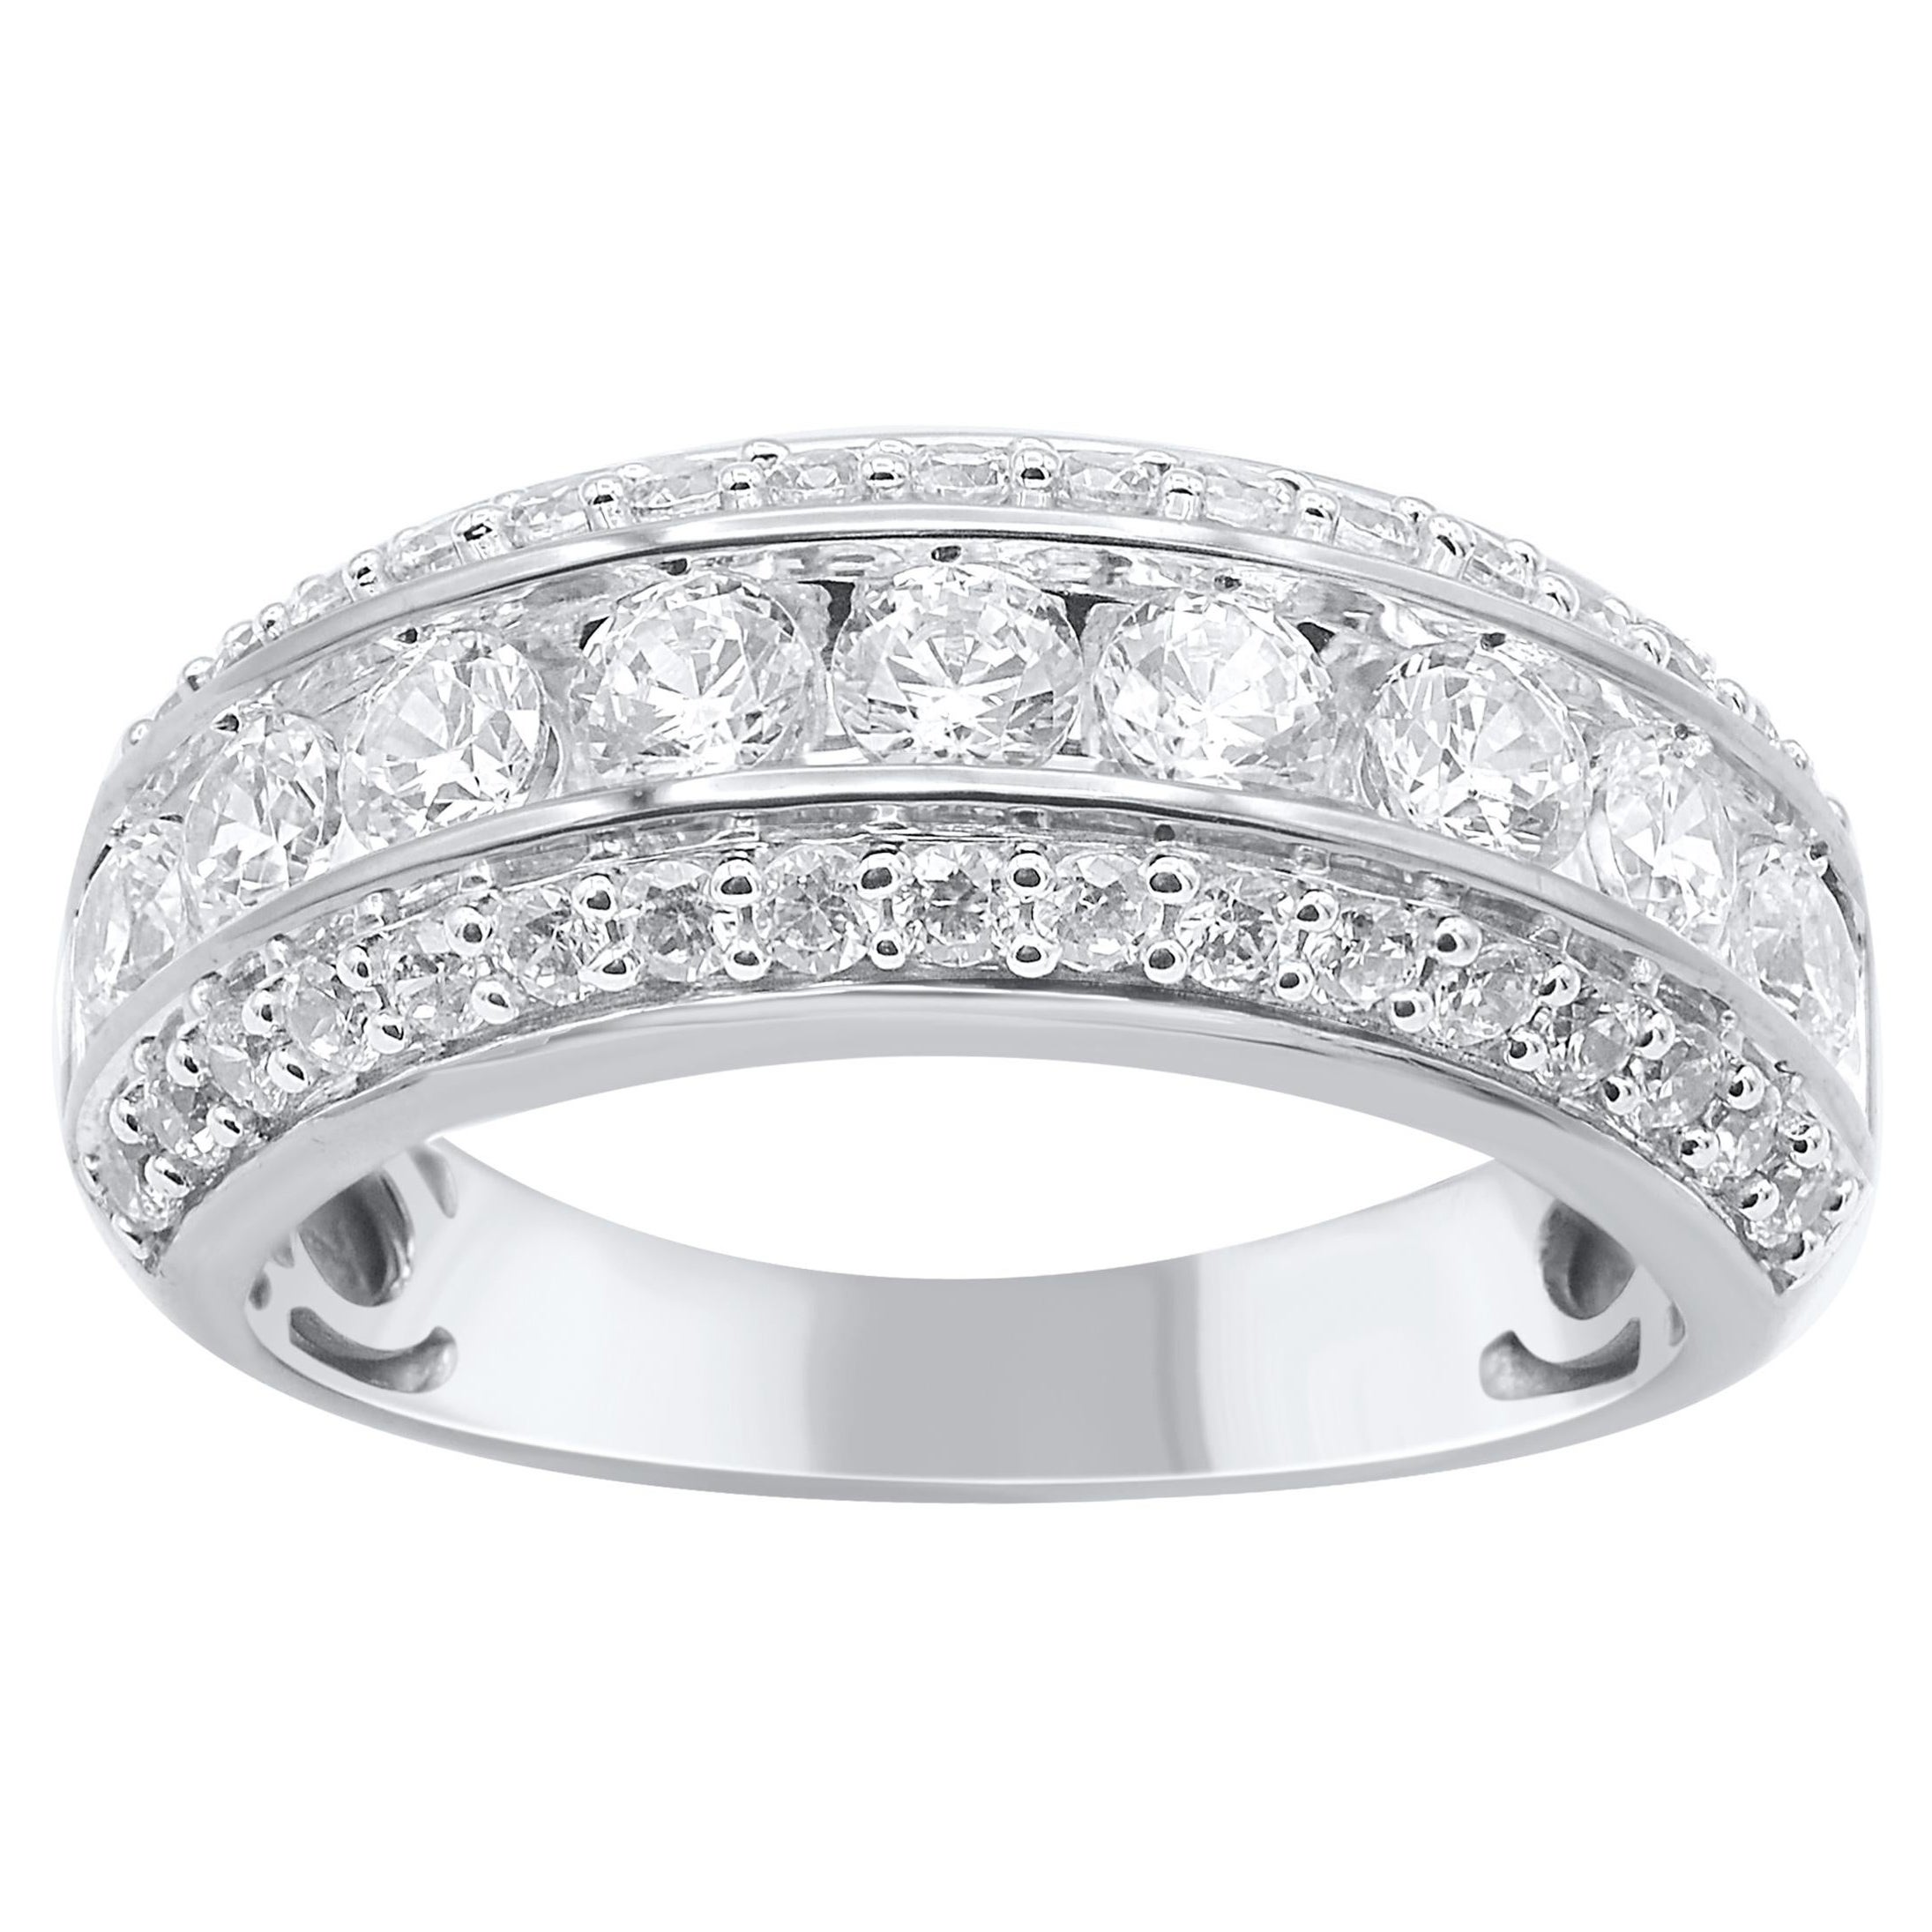 TJD 1.50 Carat Brilliant cut Diamond 14 Karat White Gold Wedding Band Ring